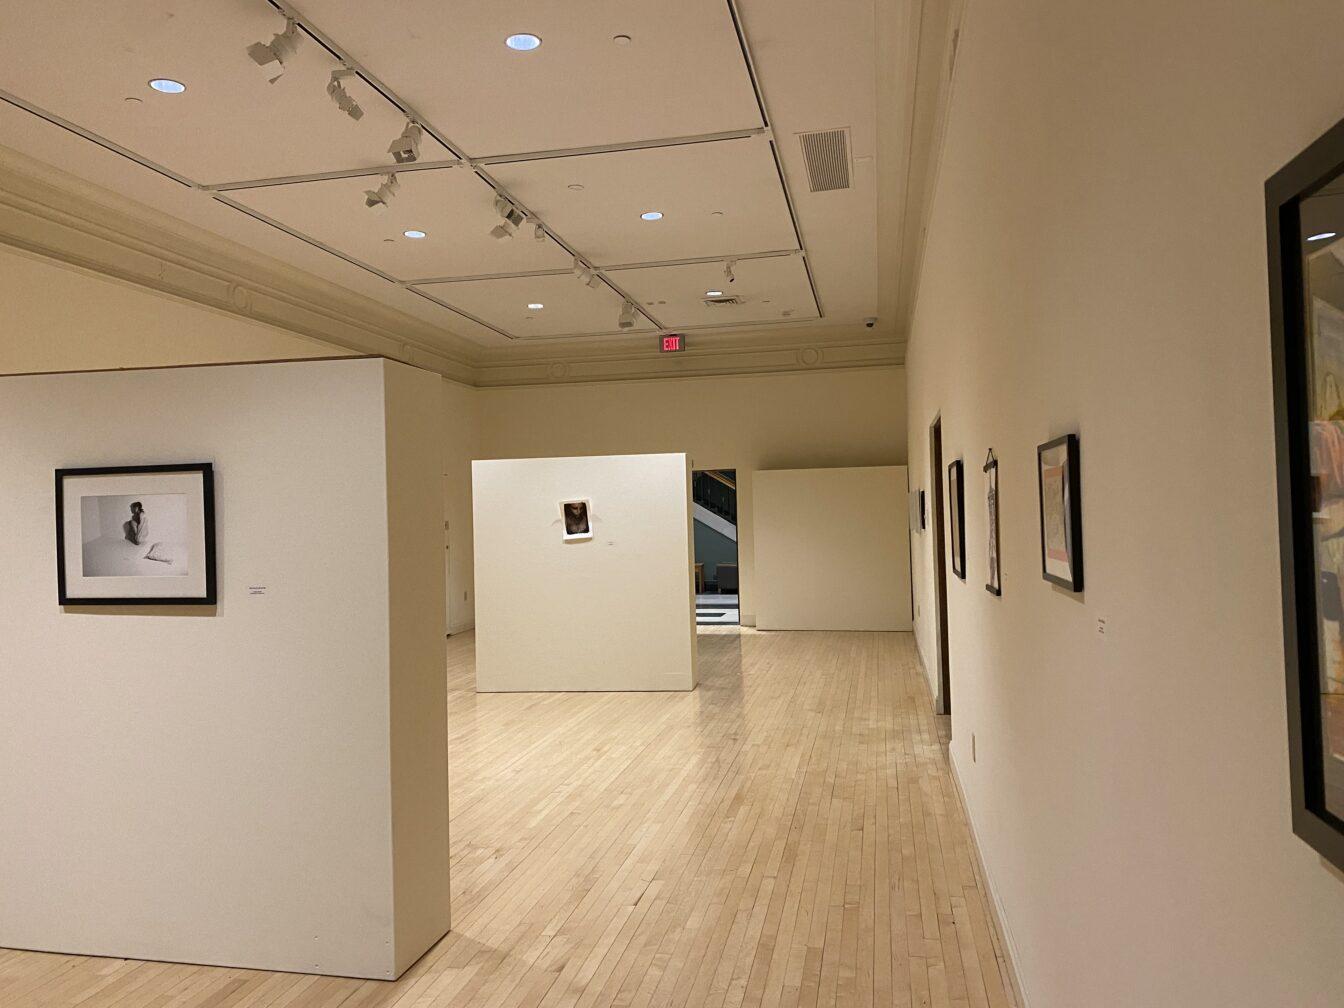 WUD Art Committee celebrates 95th anniversary of student art gallery